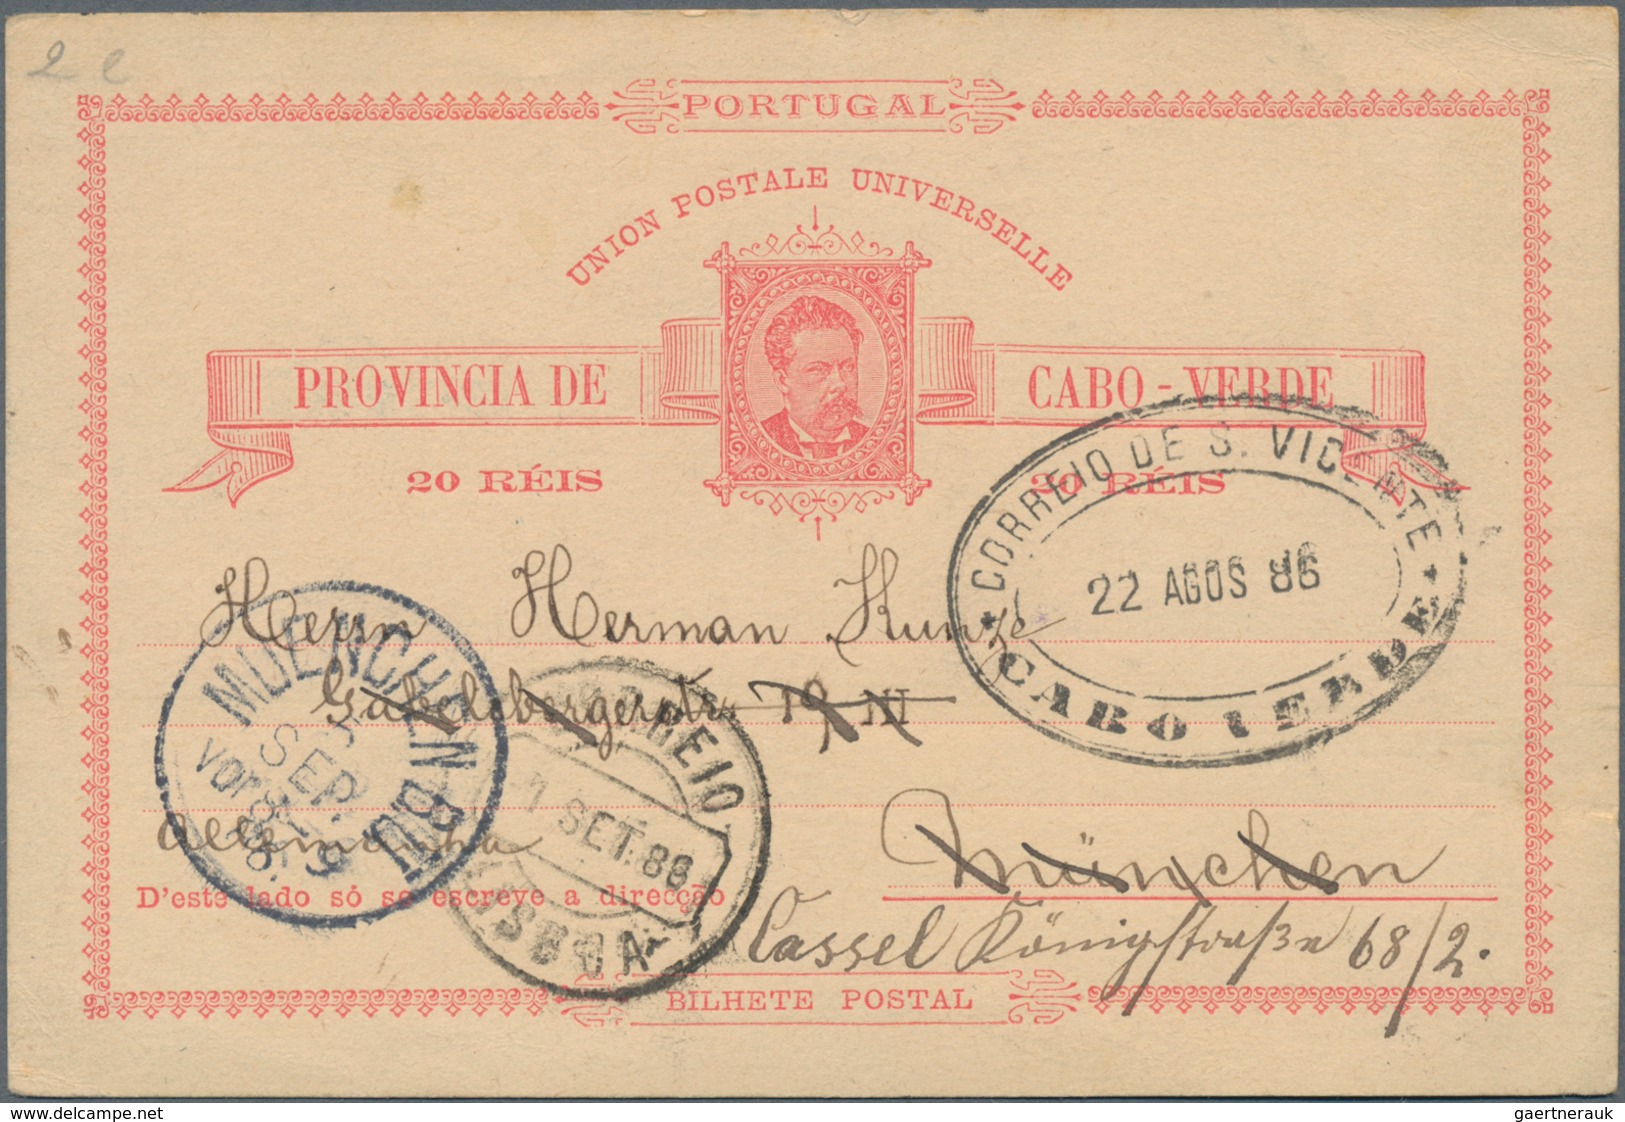 Kap Verde: 1886, 20 R. Stationery Card With Oval "CORREO DE S. VICENTE" Mark Sent Via Lisboa To Muni - Kaapverdische Eilanden